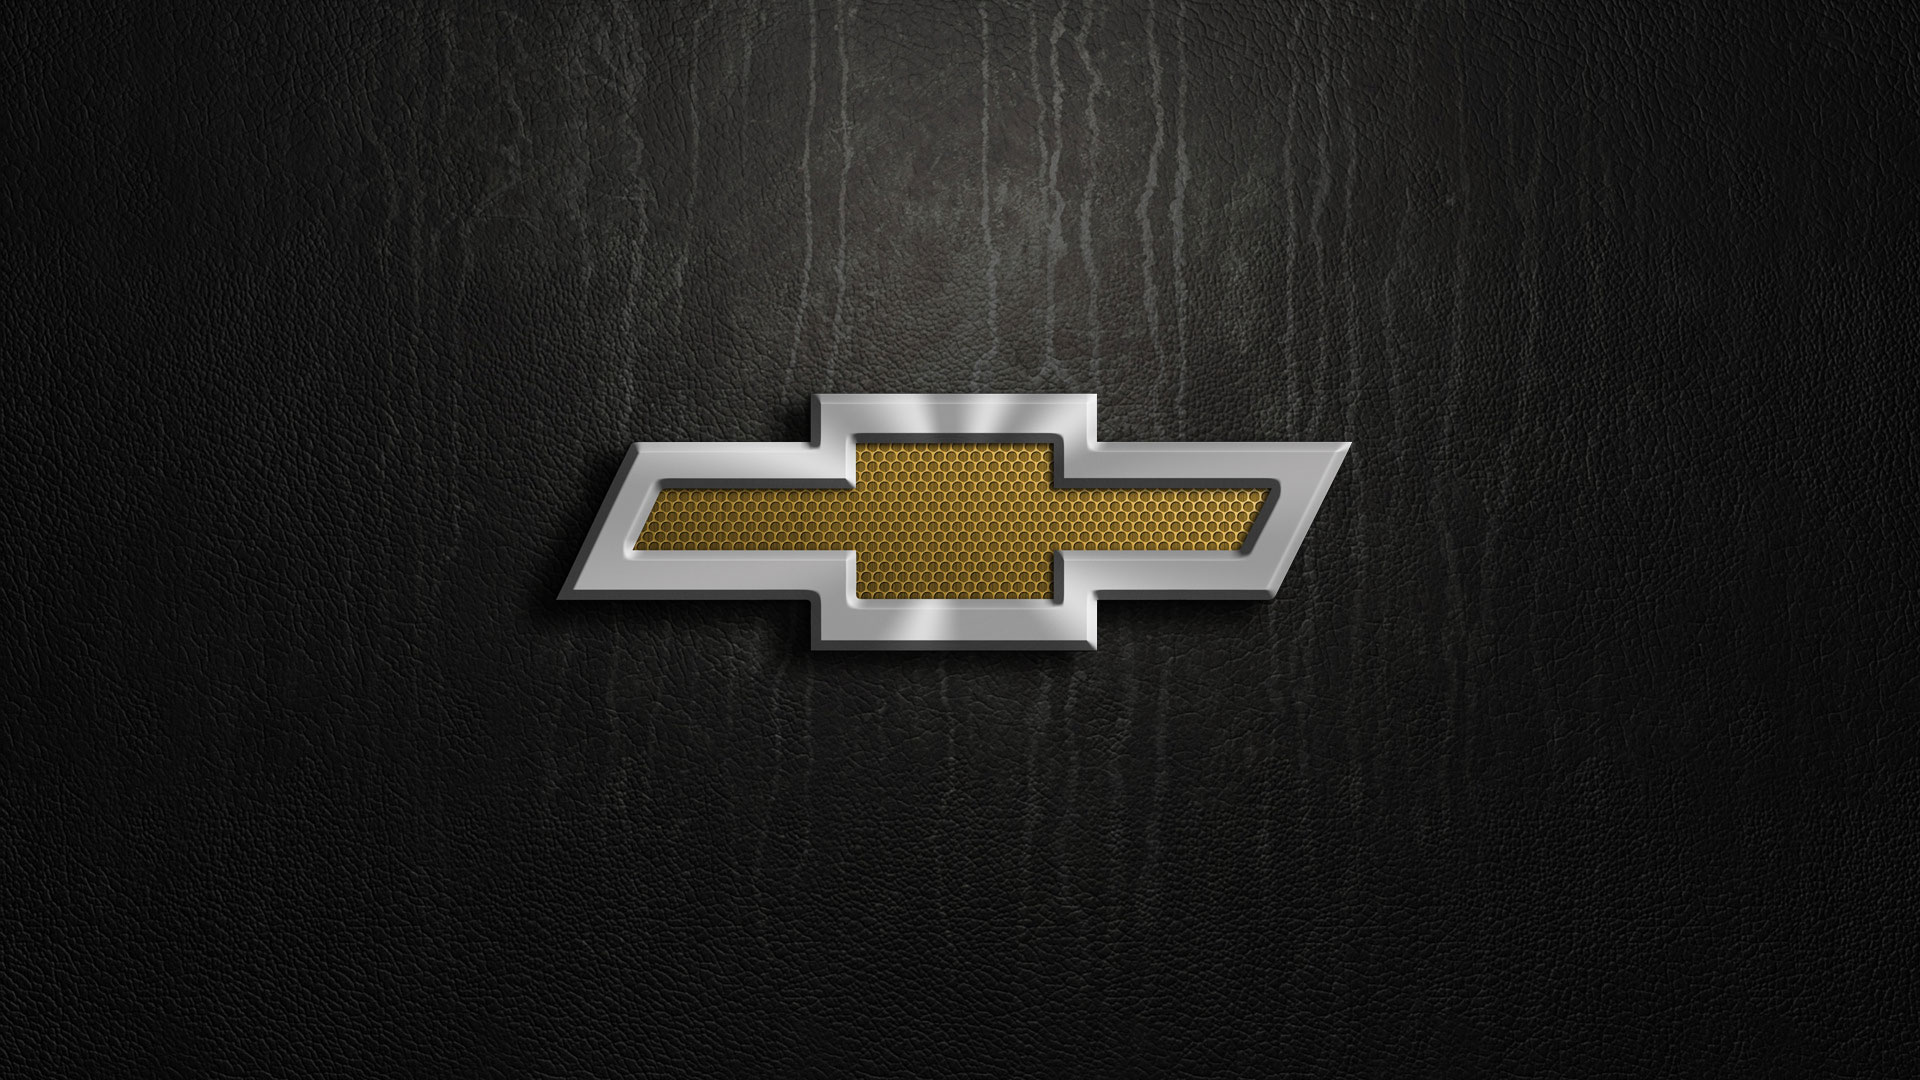  Chevrolet Leather 2014 Logo Free HD Wallpapers   Fullsize Wallpaper